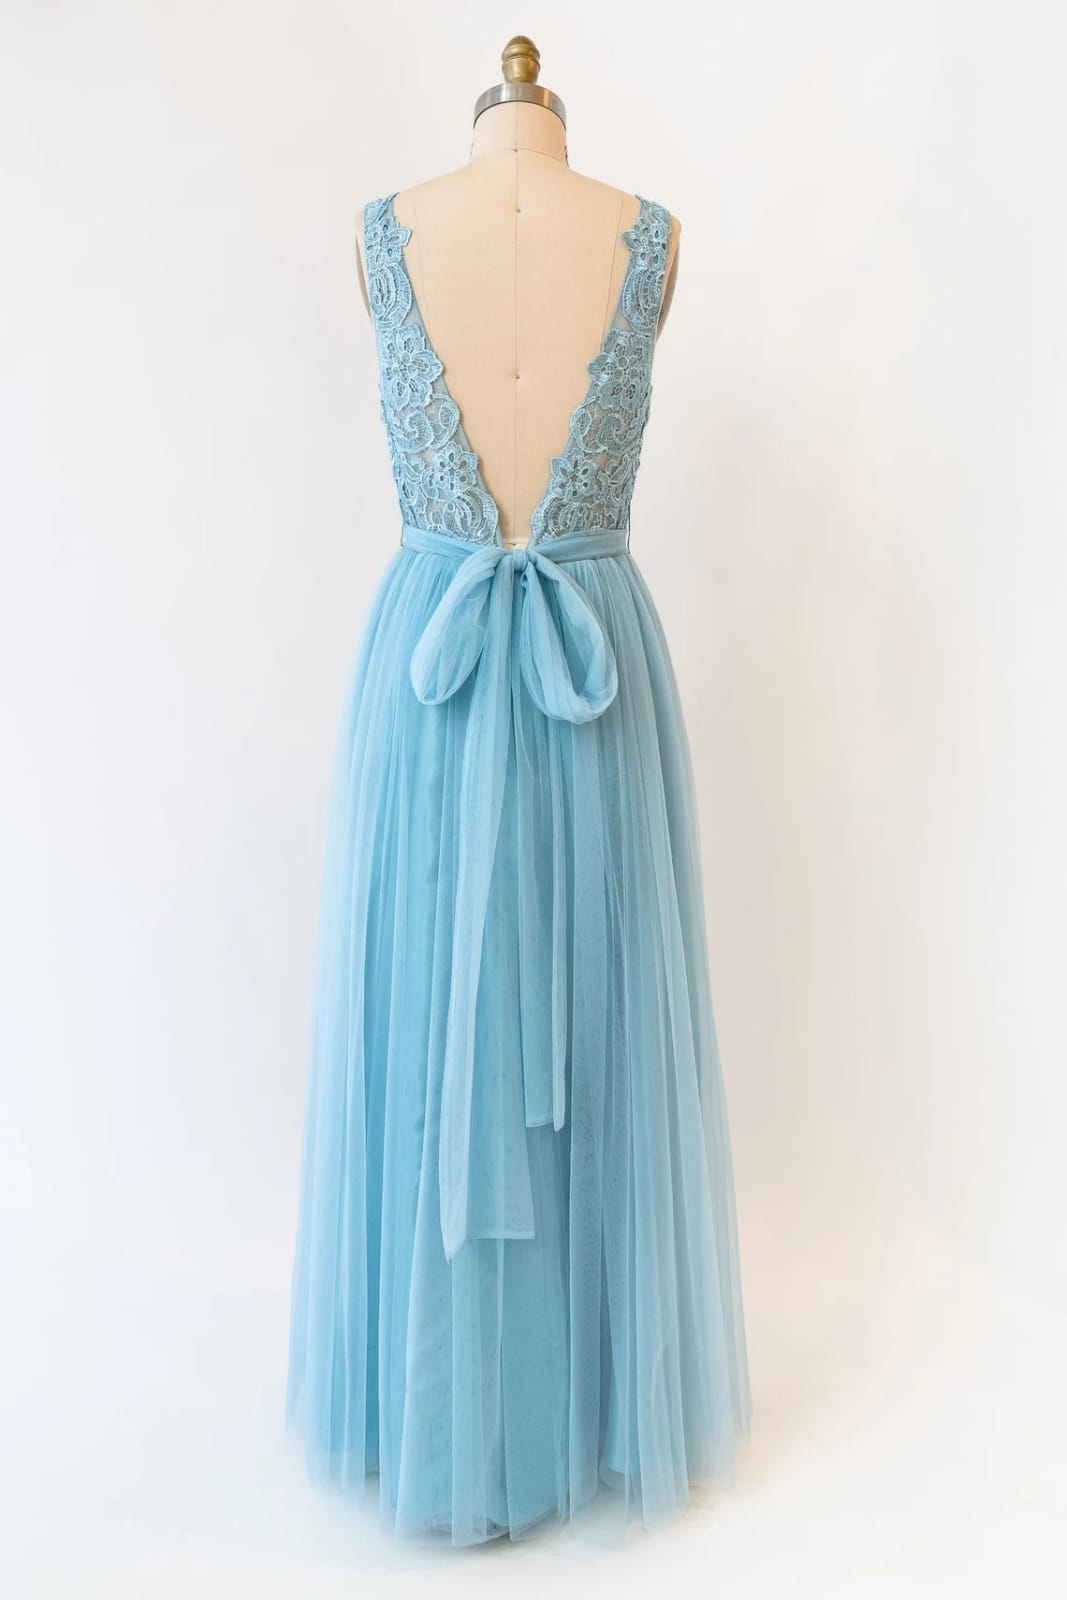 Sheer Lace Tulle Deep V Back Long Light Blue Bridesmaid Dress, Sash